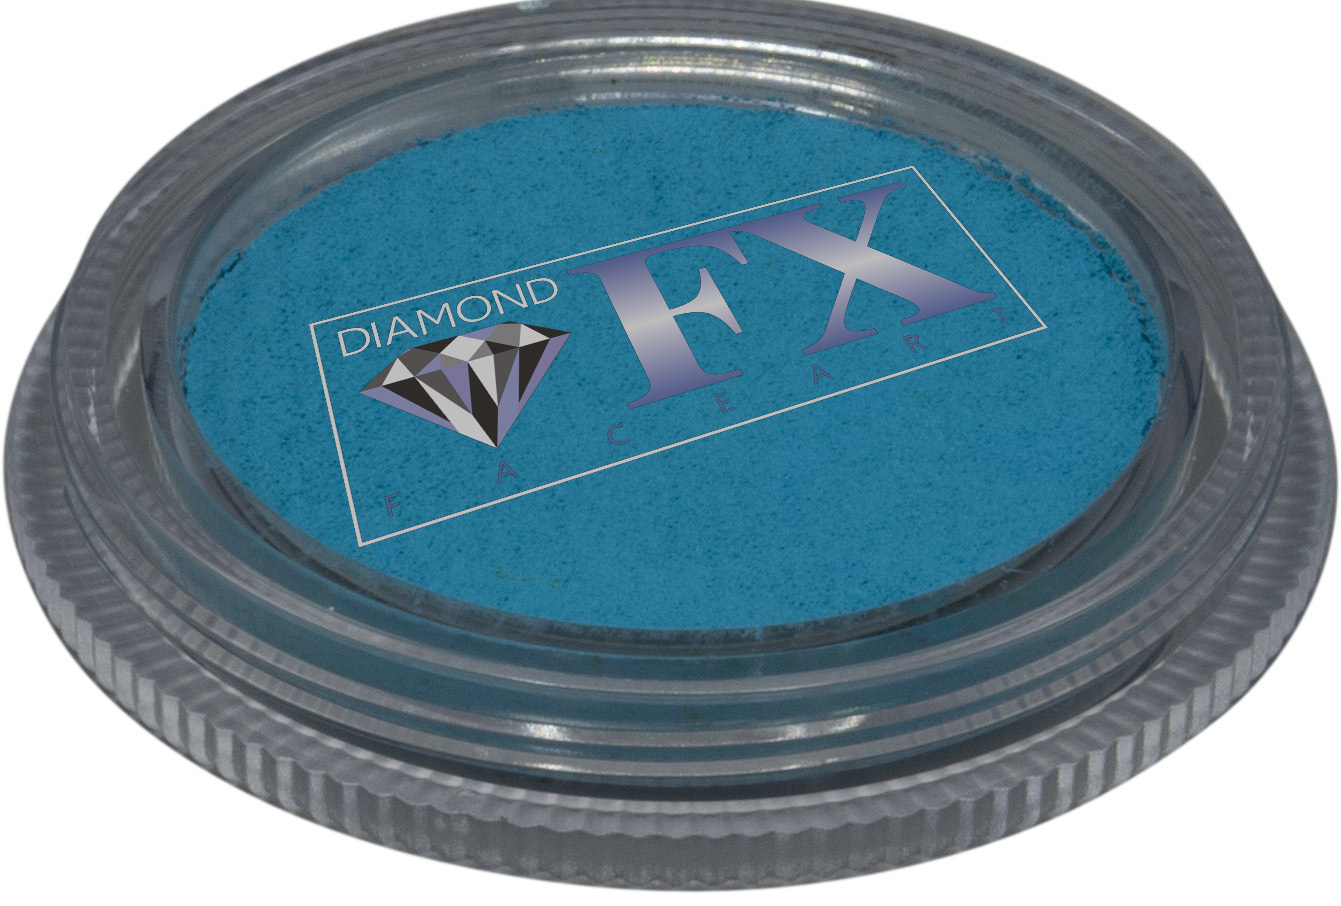 Diamond FX Sea Green 30g - Small Image